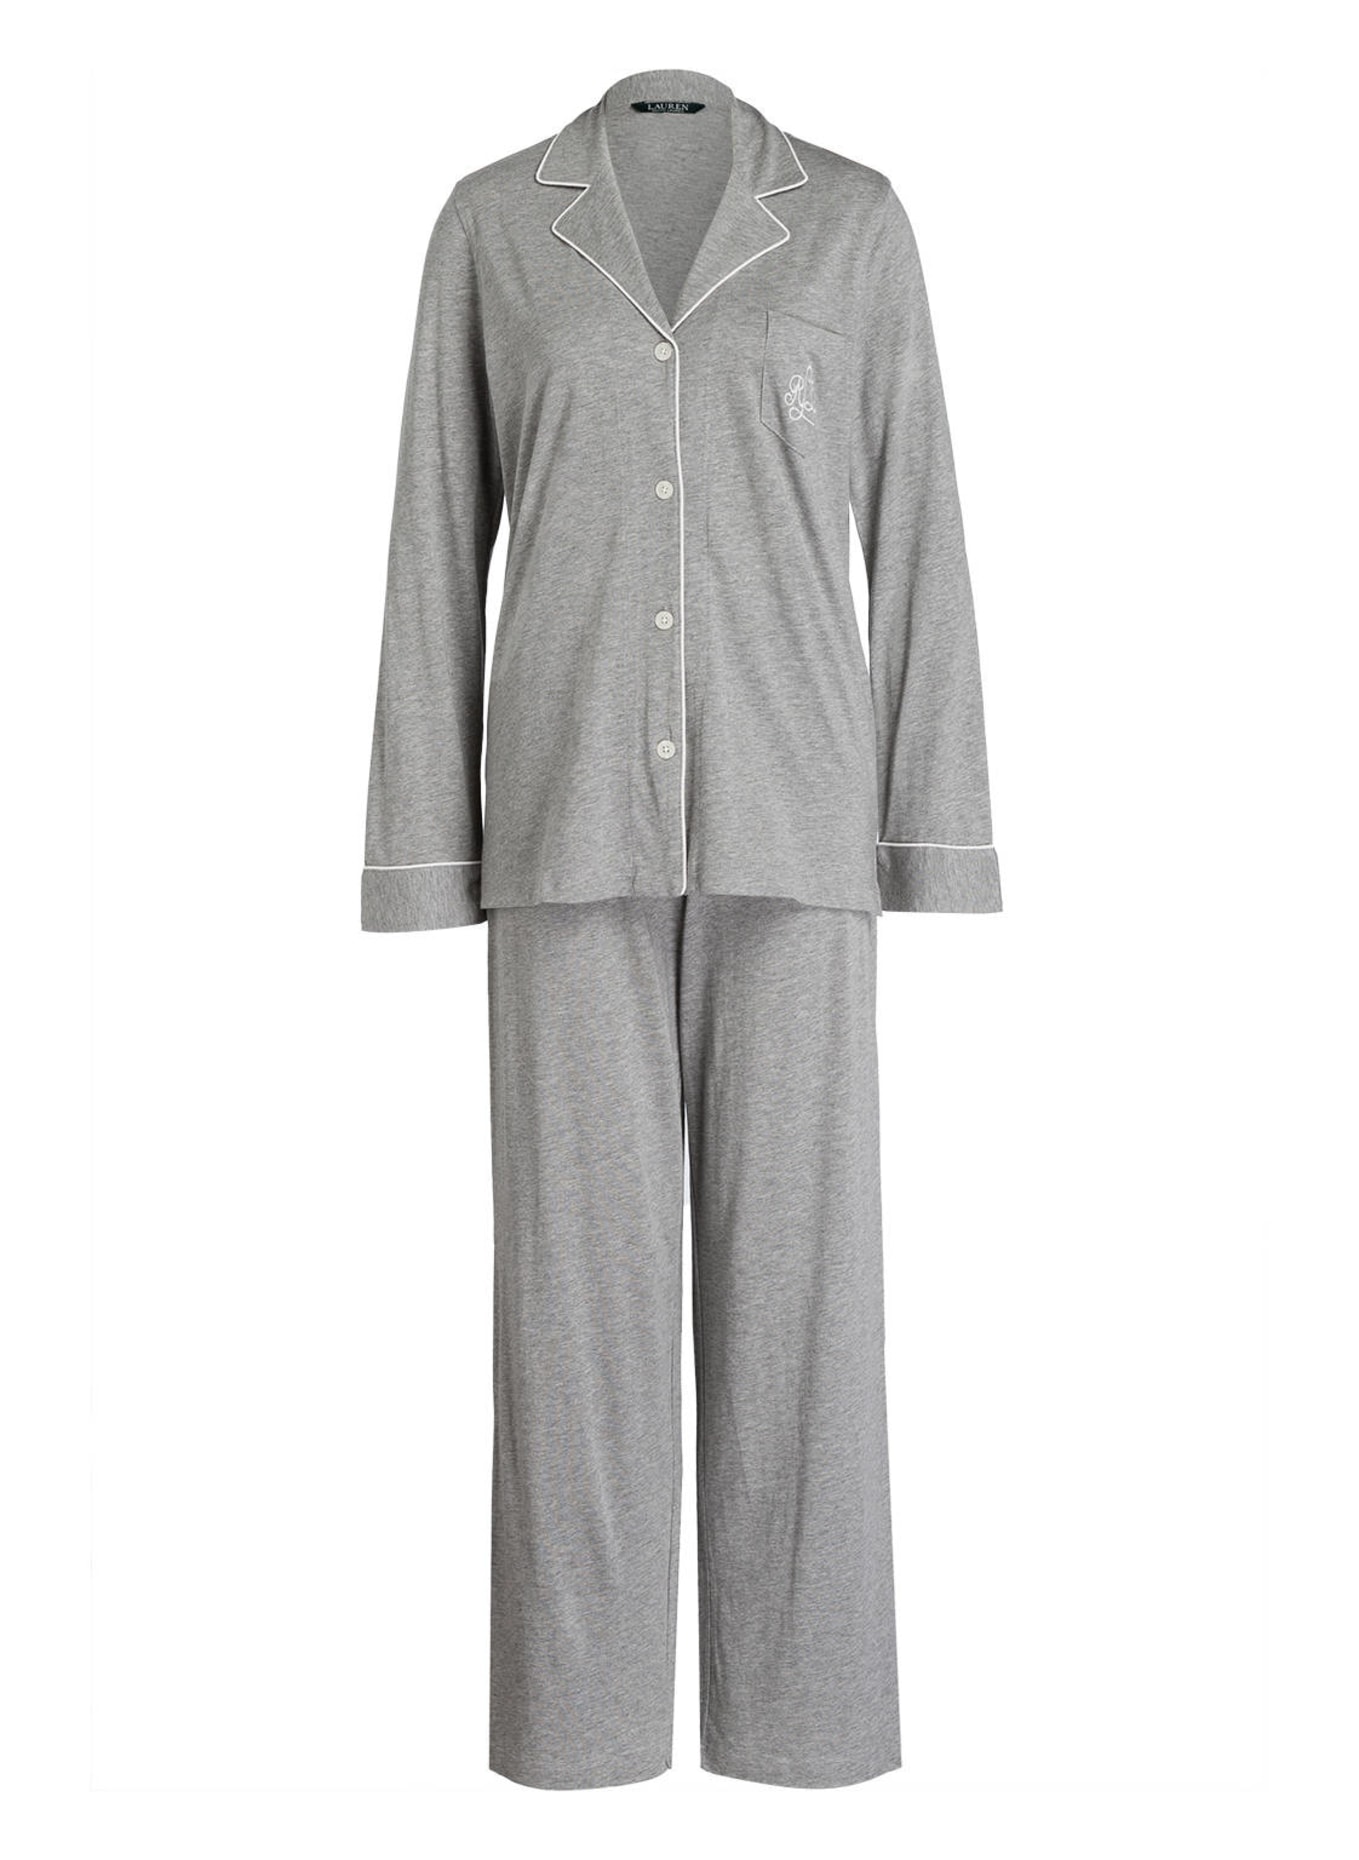 LAUREN RALPH LAUREN Schlafanzug, Farbe: GRAU (Bild 1)